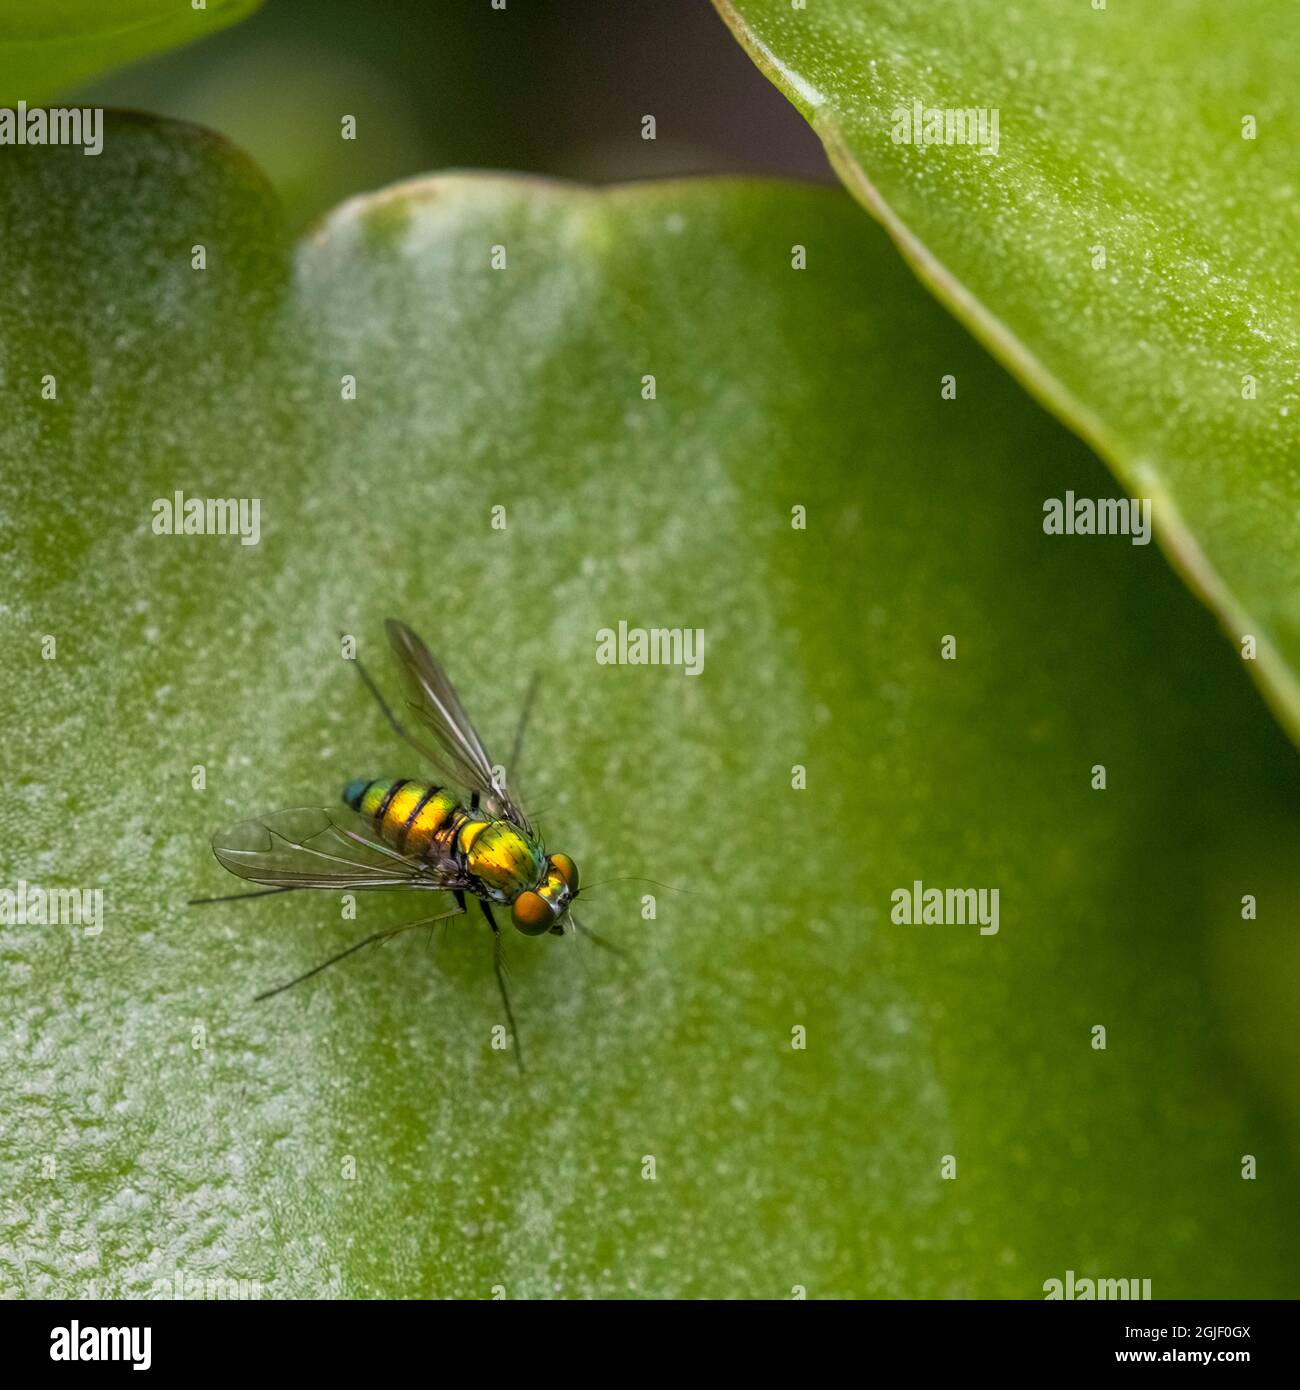 USA, New York State. Long-legged Fly (Condylostylus spp.) photographed close-up. Stock Photo